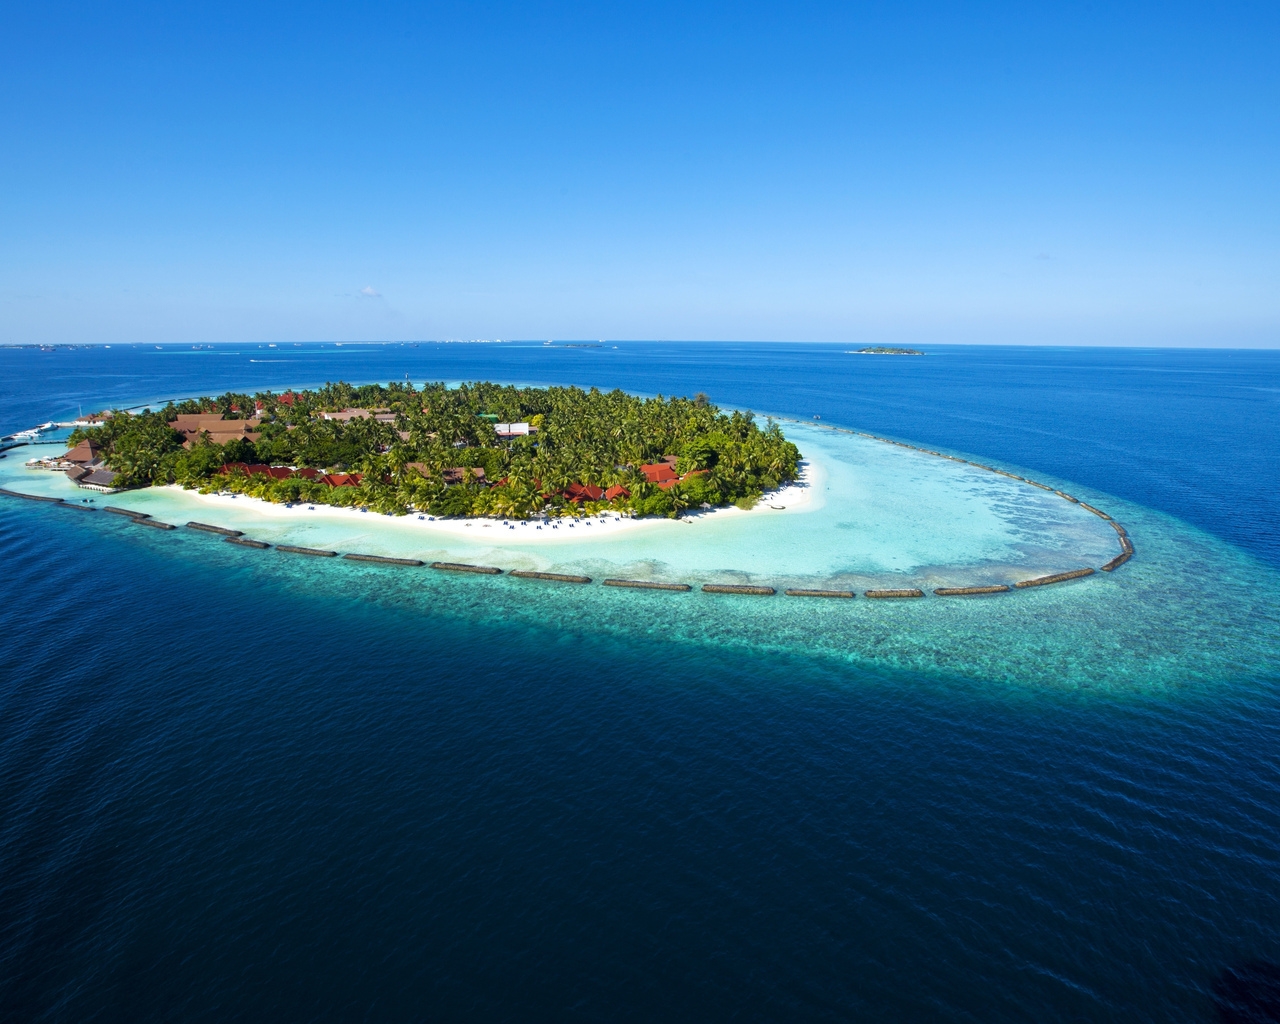 Amazing Maldives Island View for 1280 x 1024 resolution